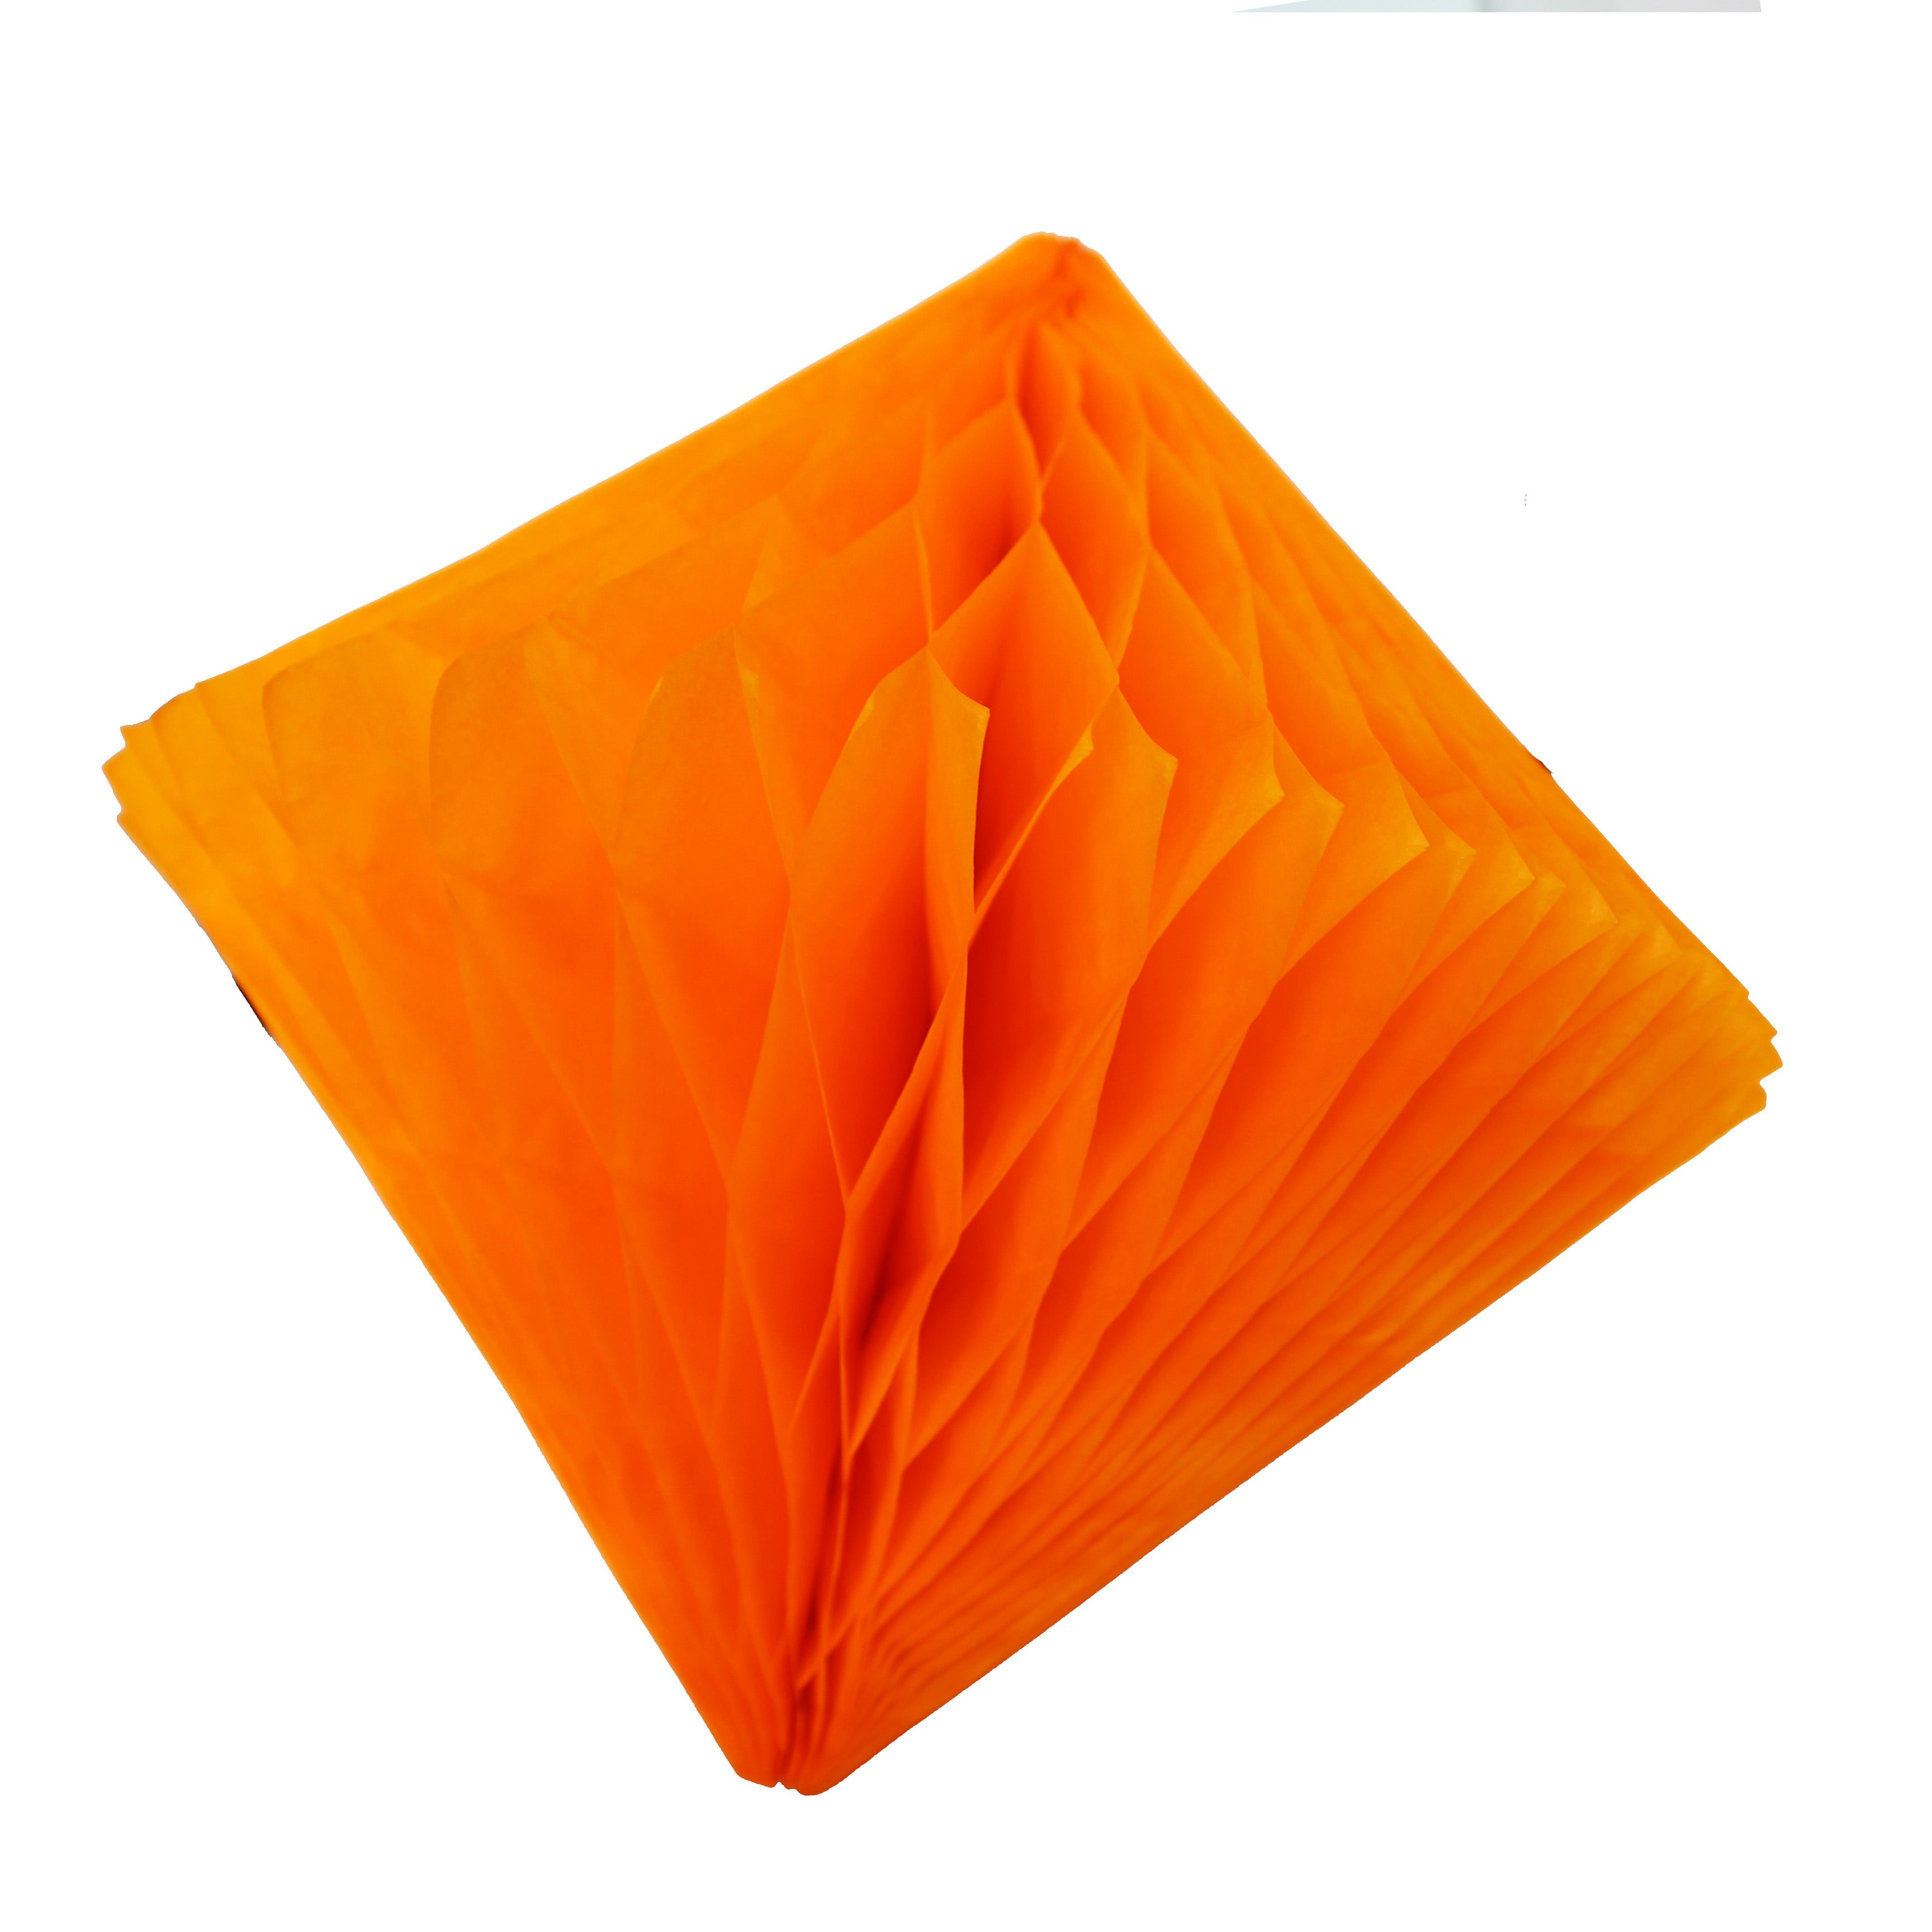 Rombo - Naranja Cempasuchil